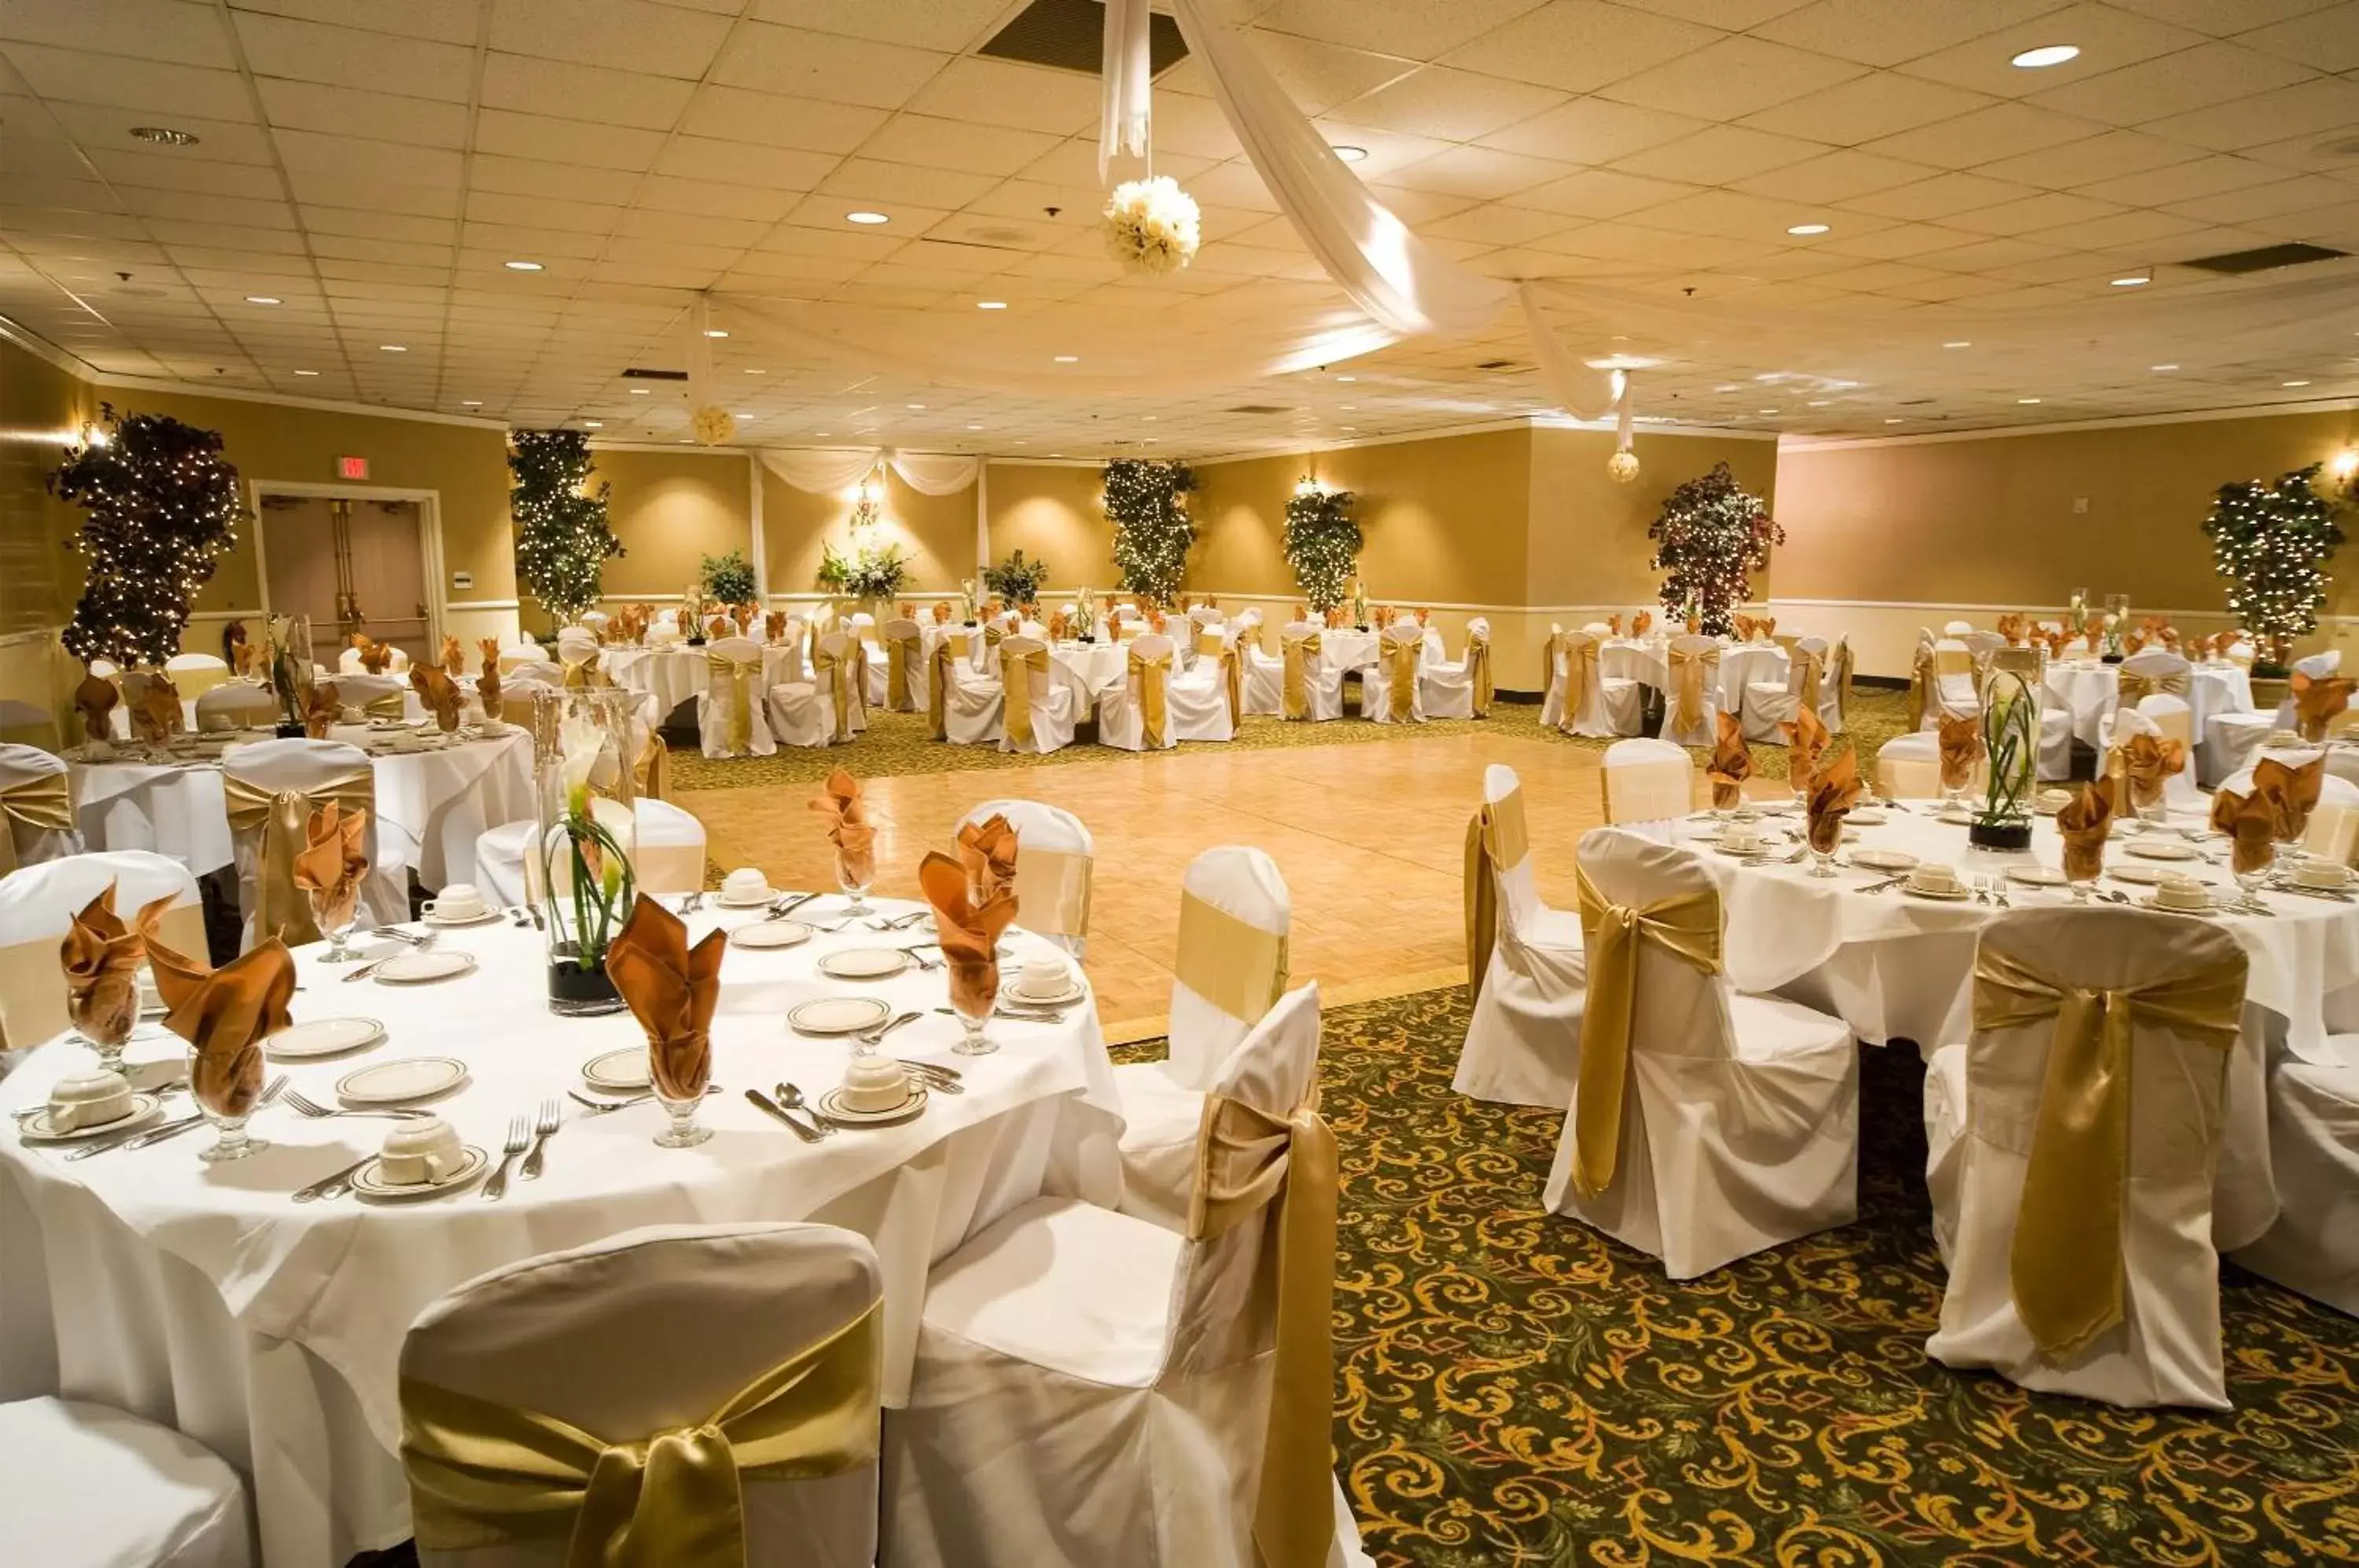 Banquet/Function facilities, Banquet Facilities in Arizona Charlie's Decatur